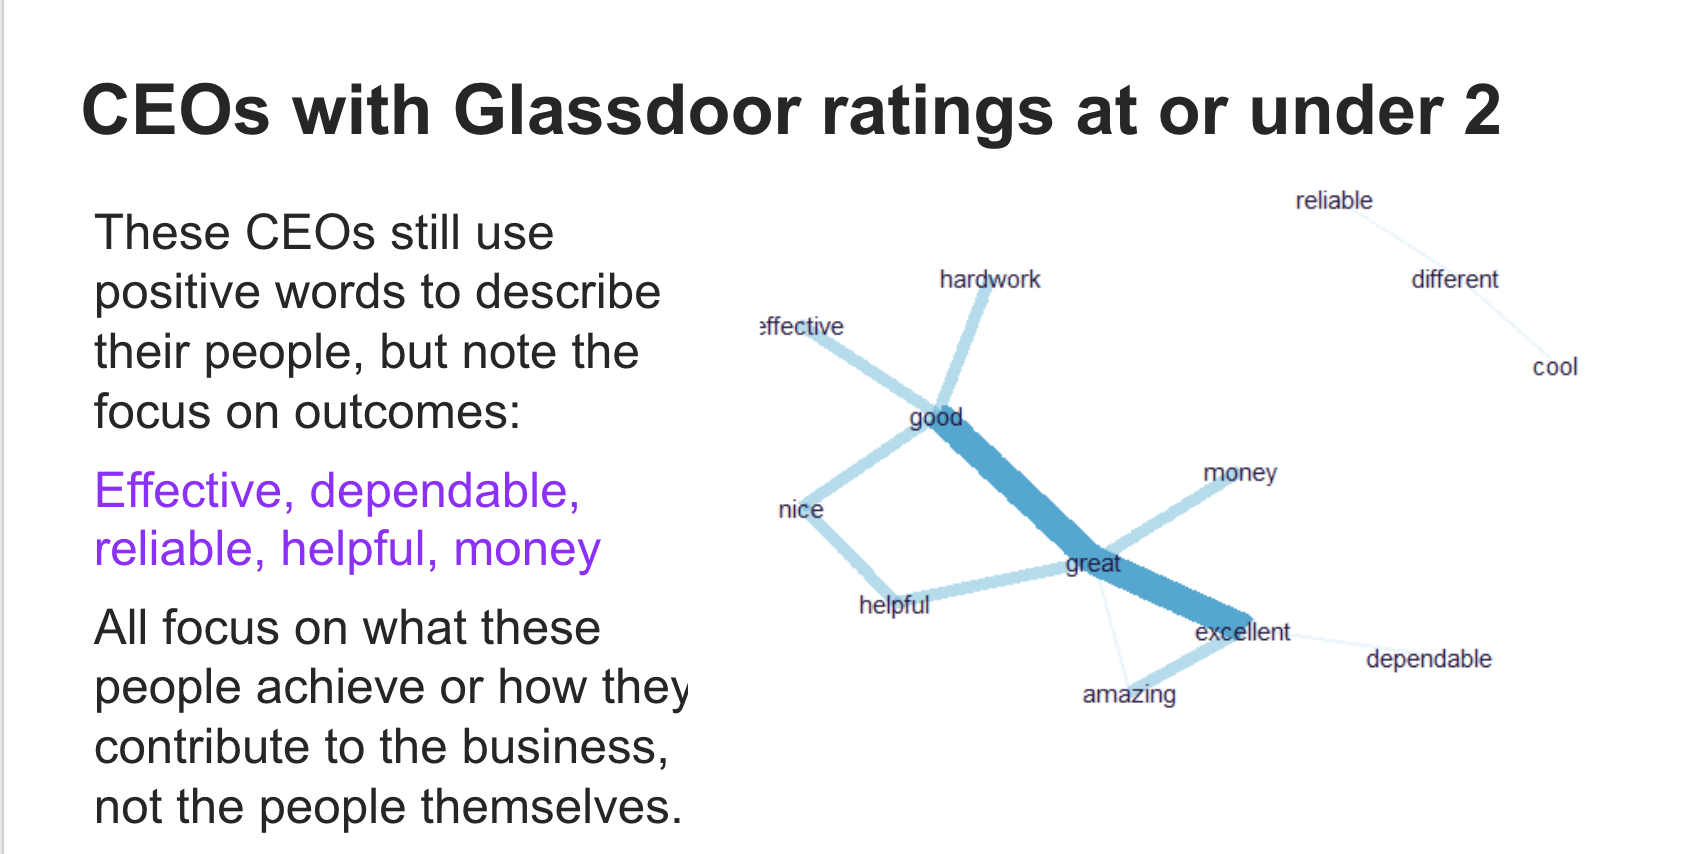 CEOs Glassdoor rating under 2